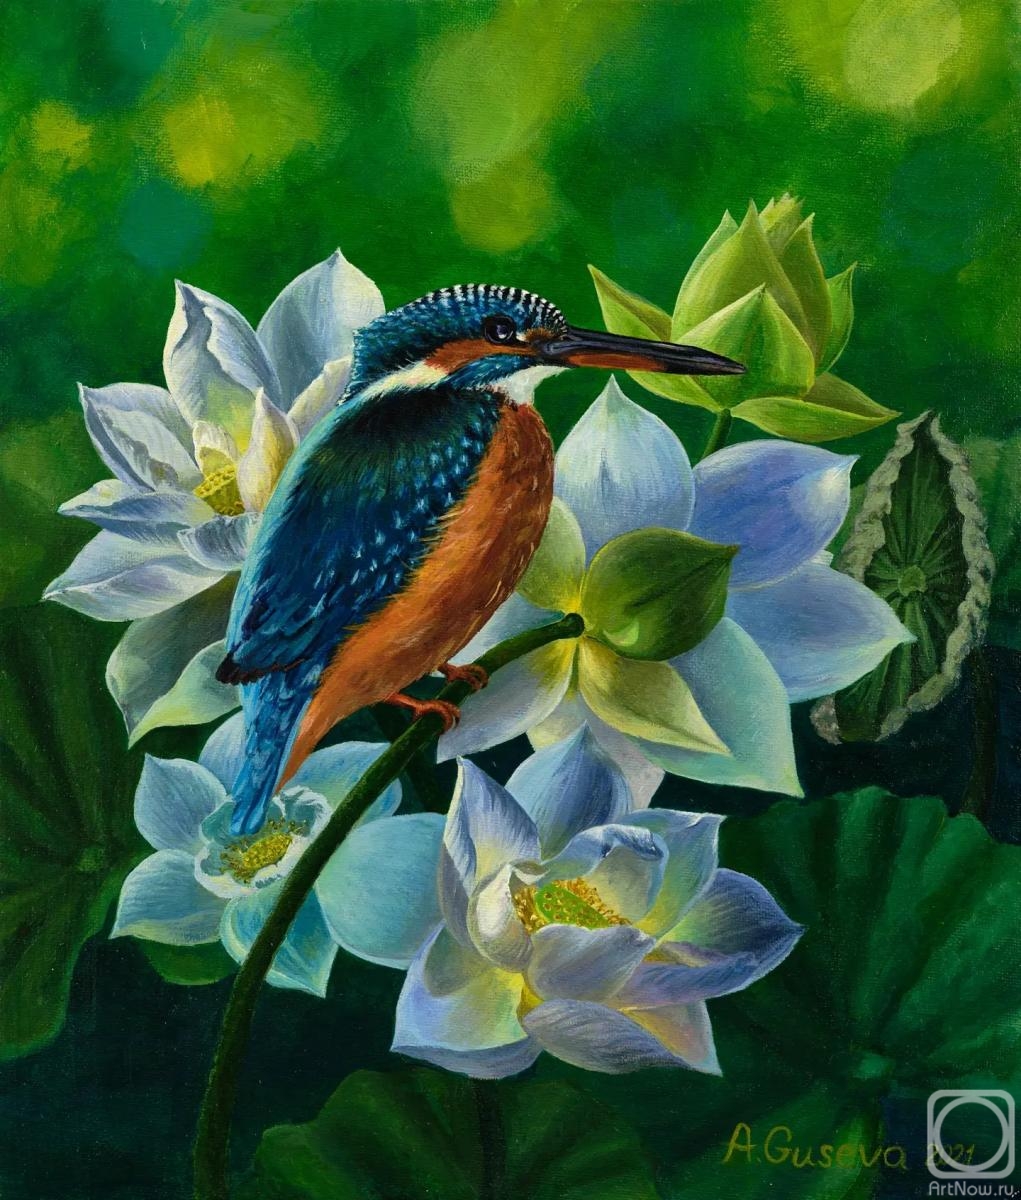 Guseva Alyona. Kingfisher